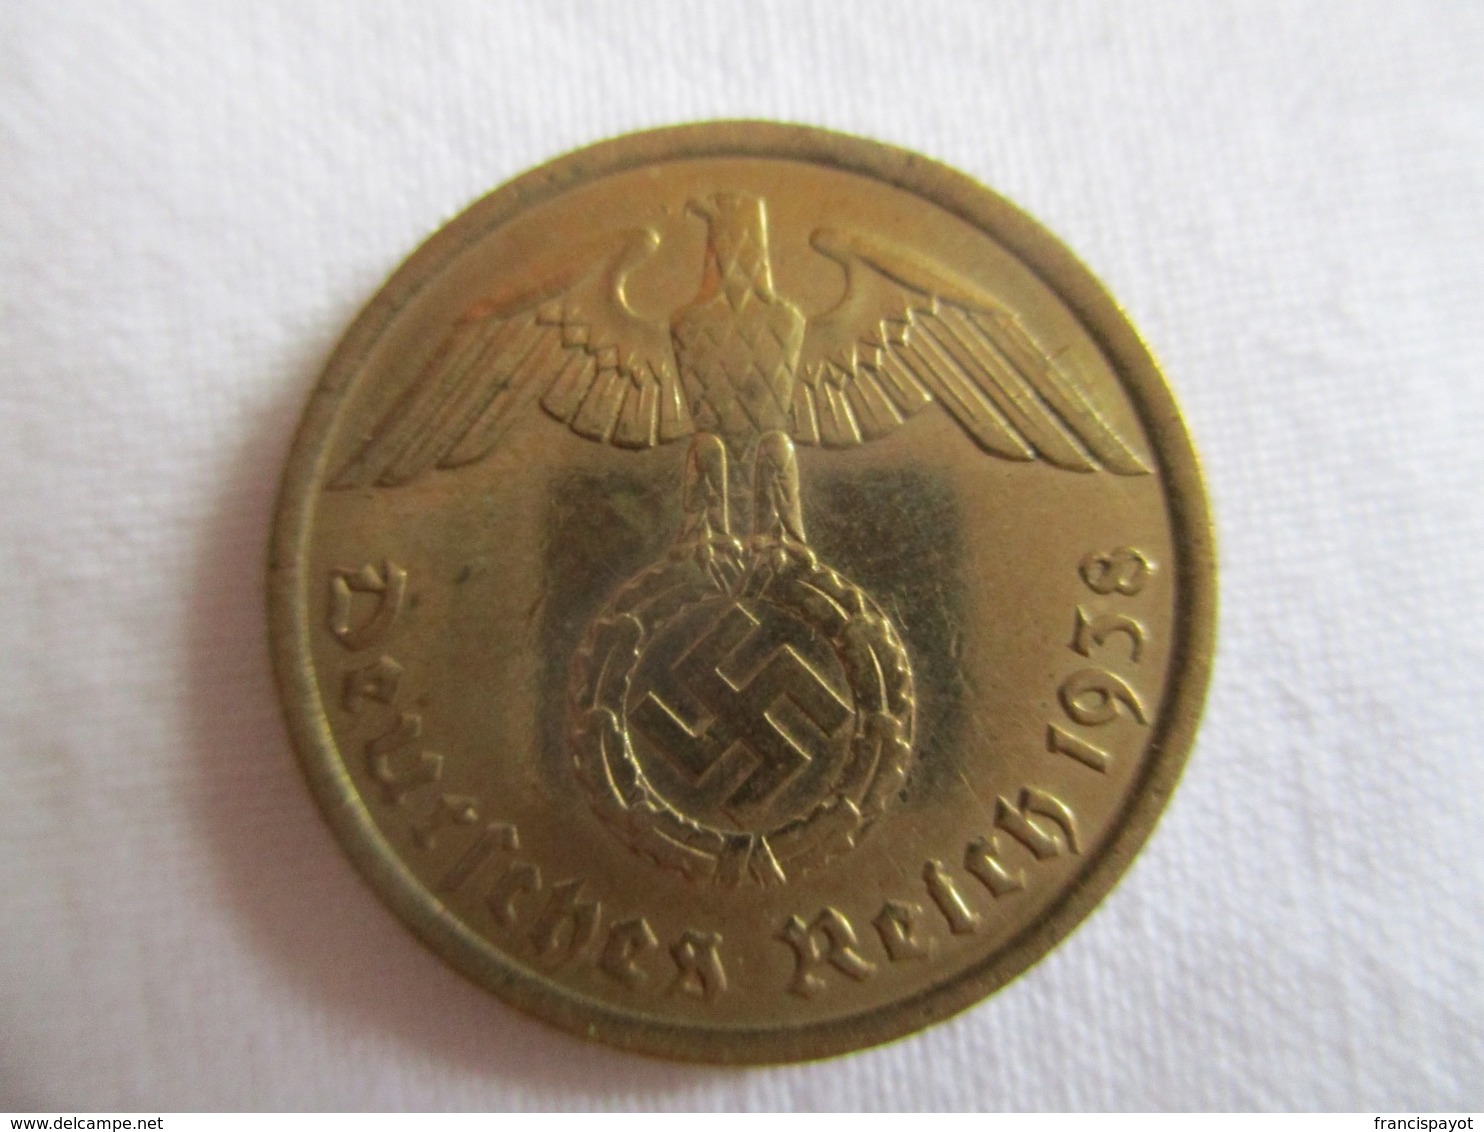 Germany: 10 Pfennig 1938 A - 10 Reichspfennig